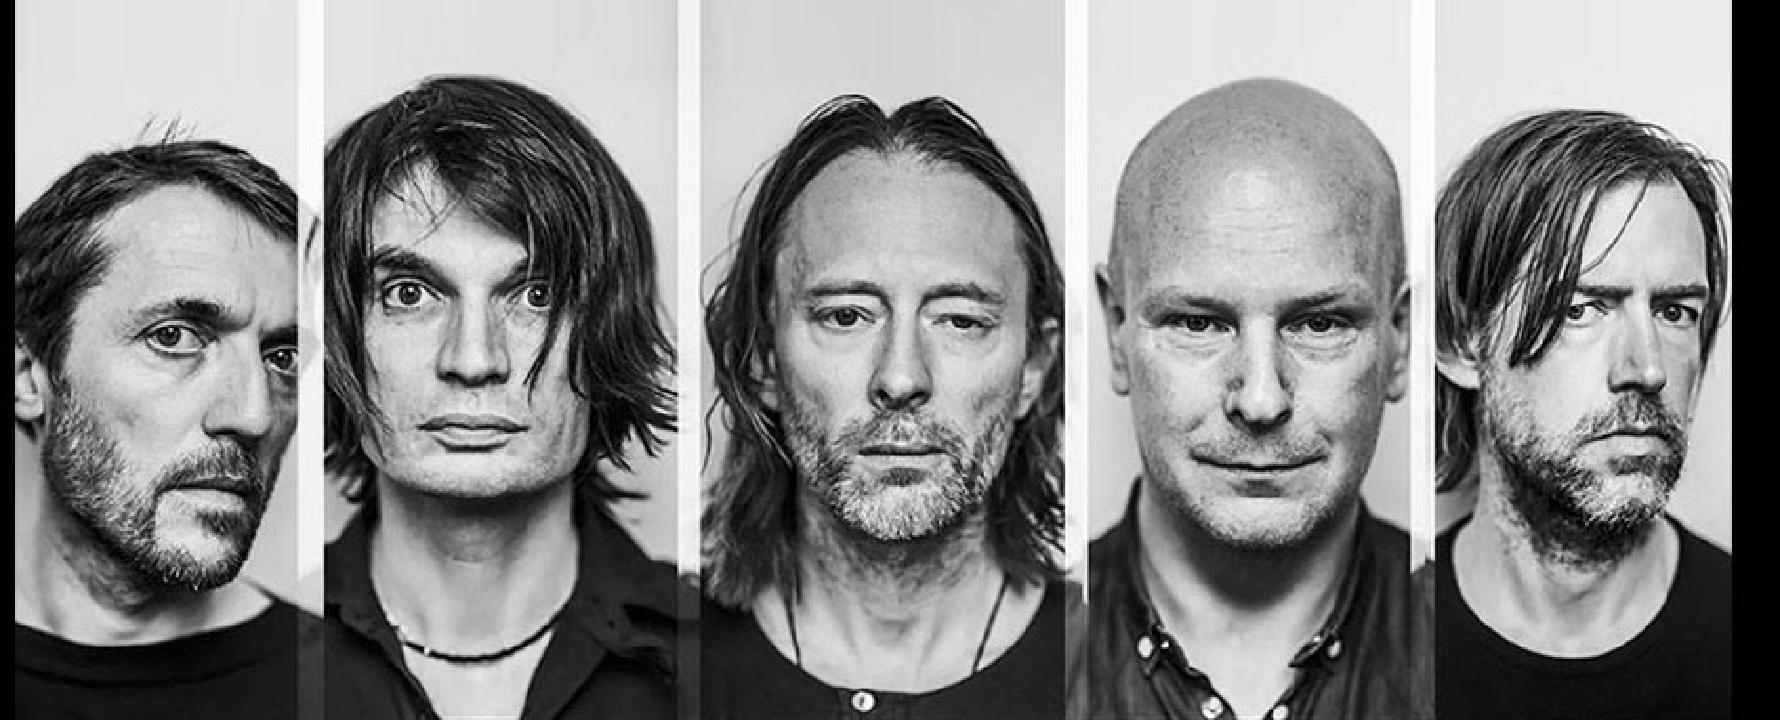 Promotional photograph of Radiohead.